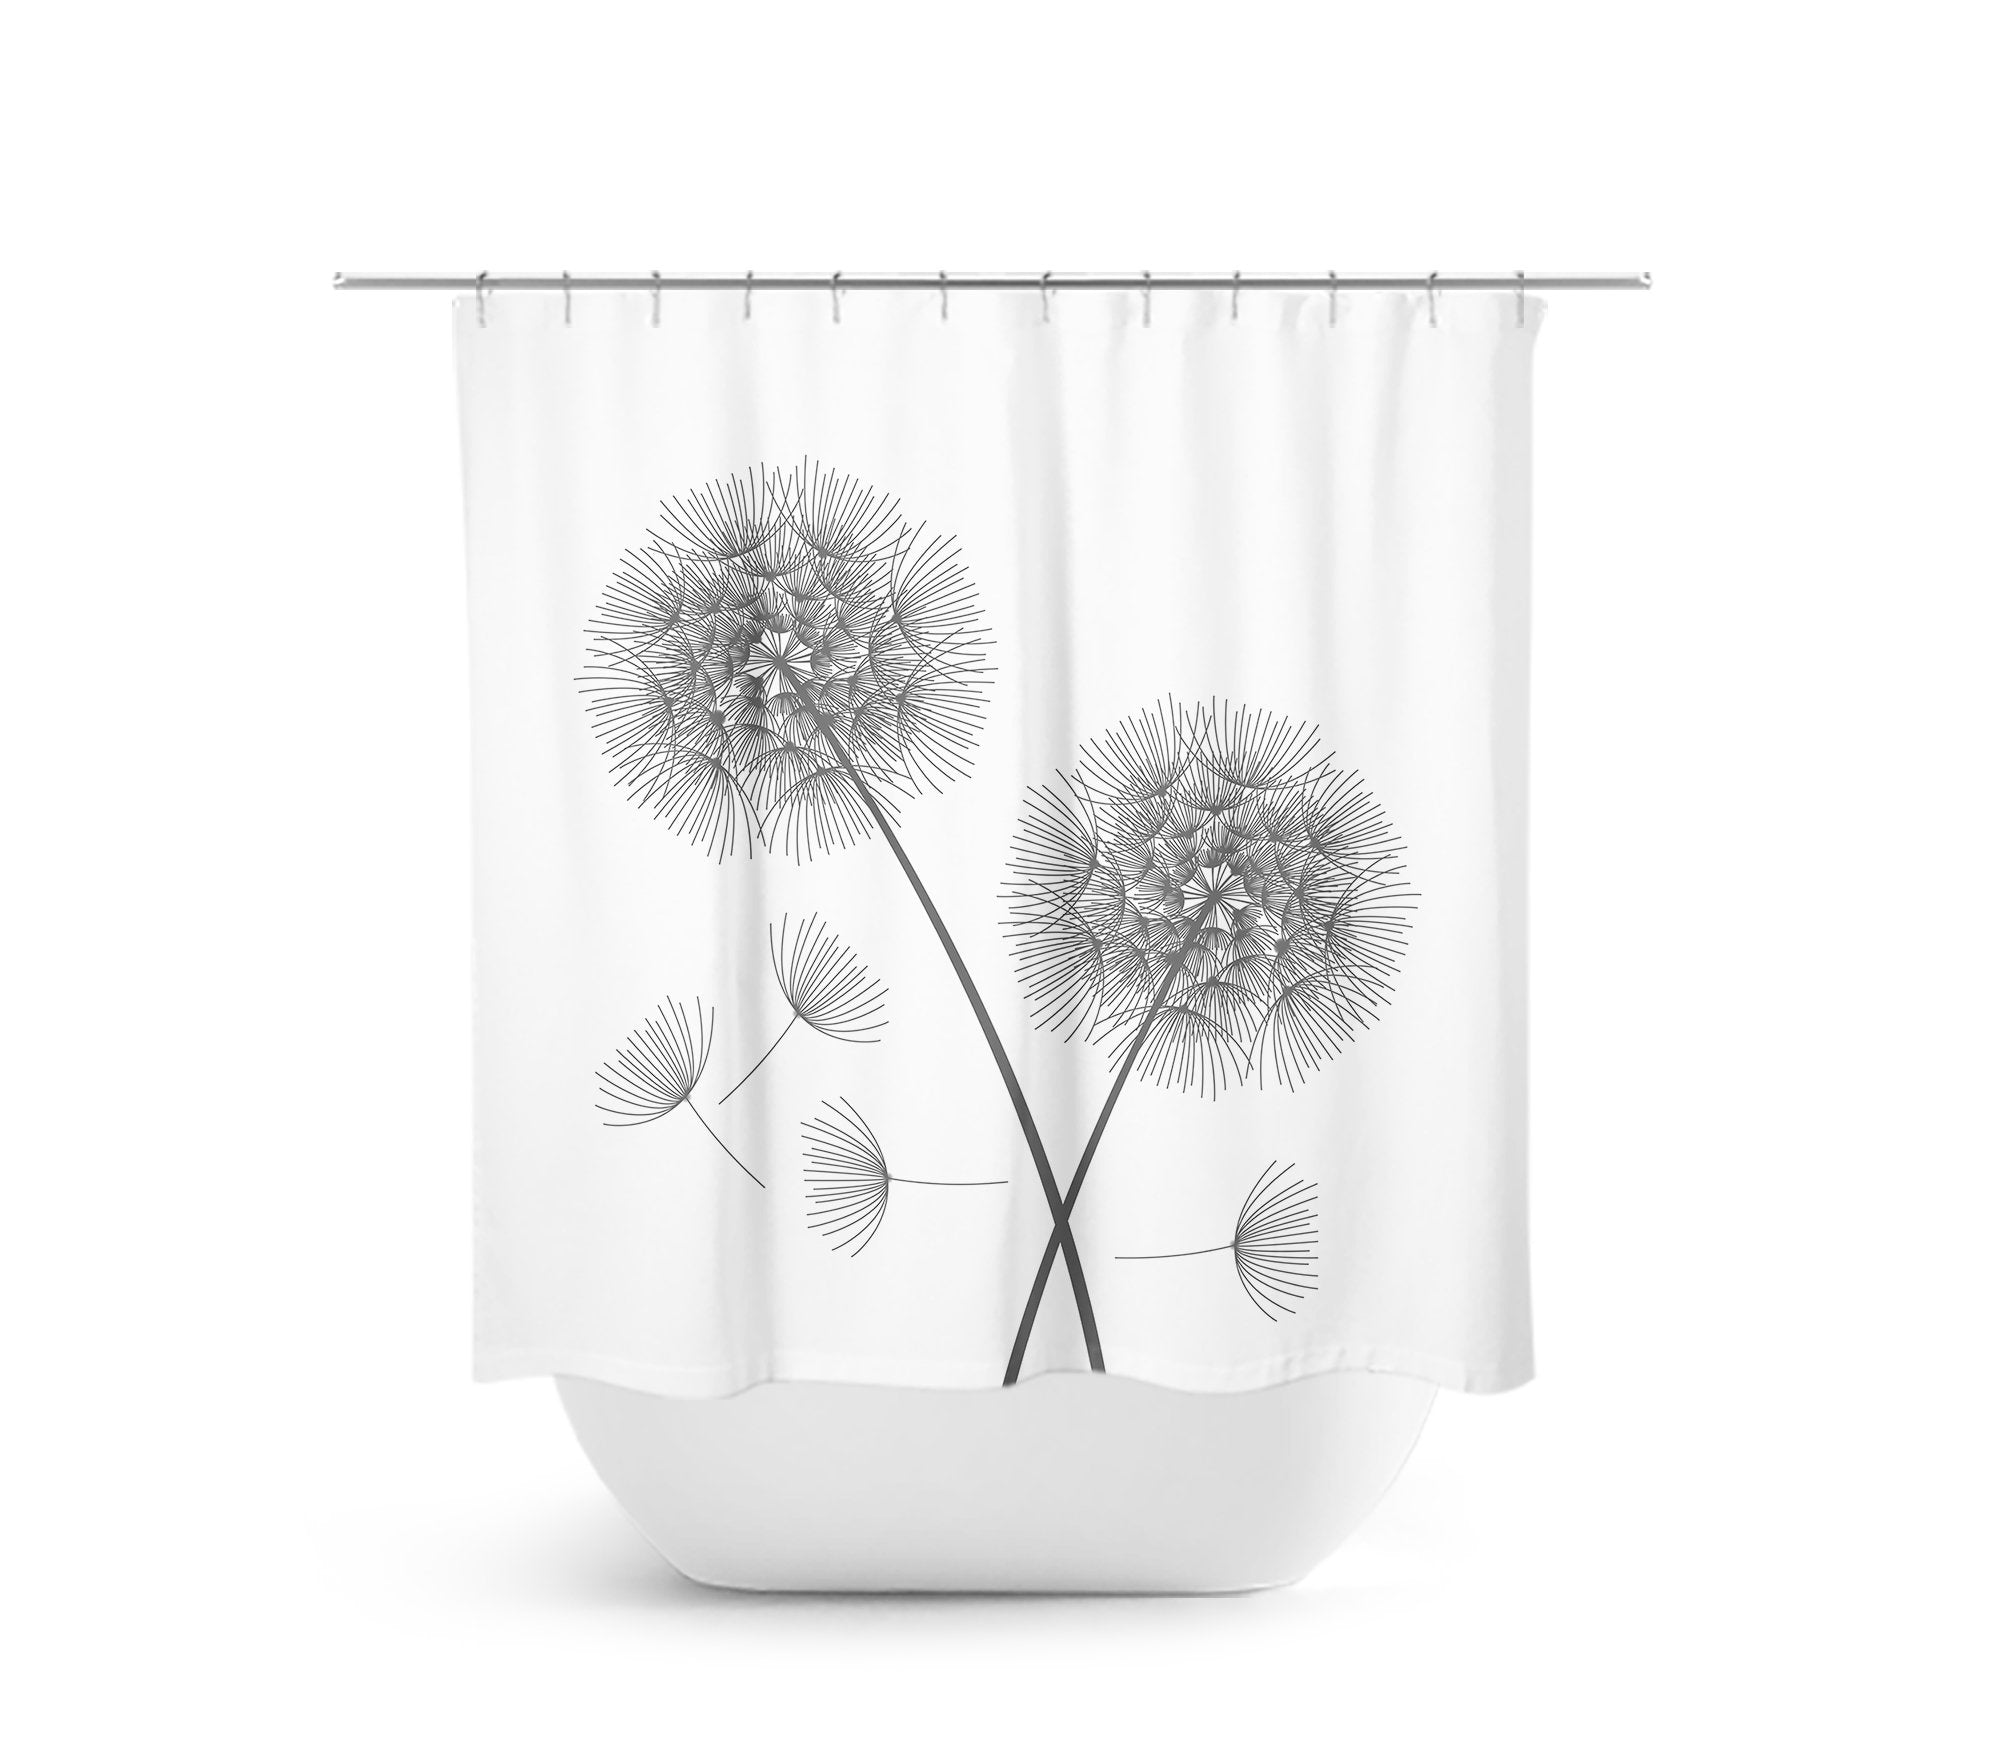 Minimalist White & Gray Dandelion Fabric Shower Curtain - SHOWER54